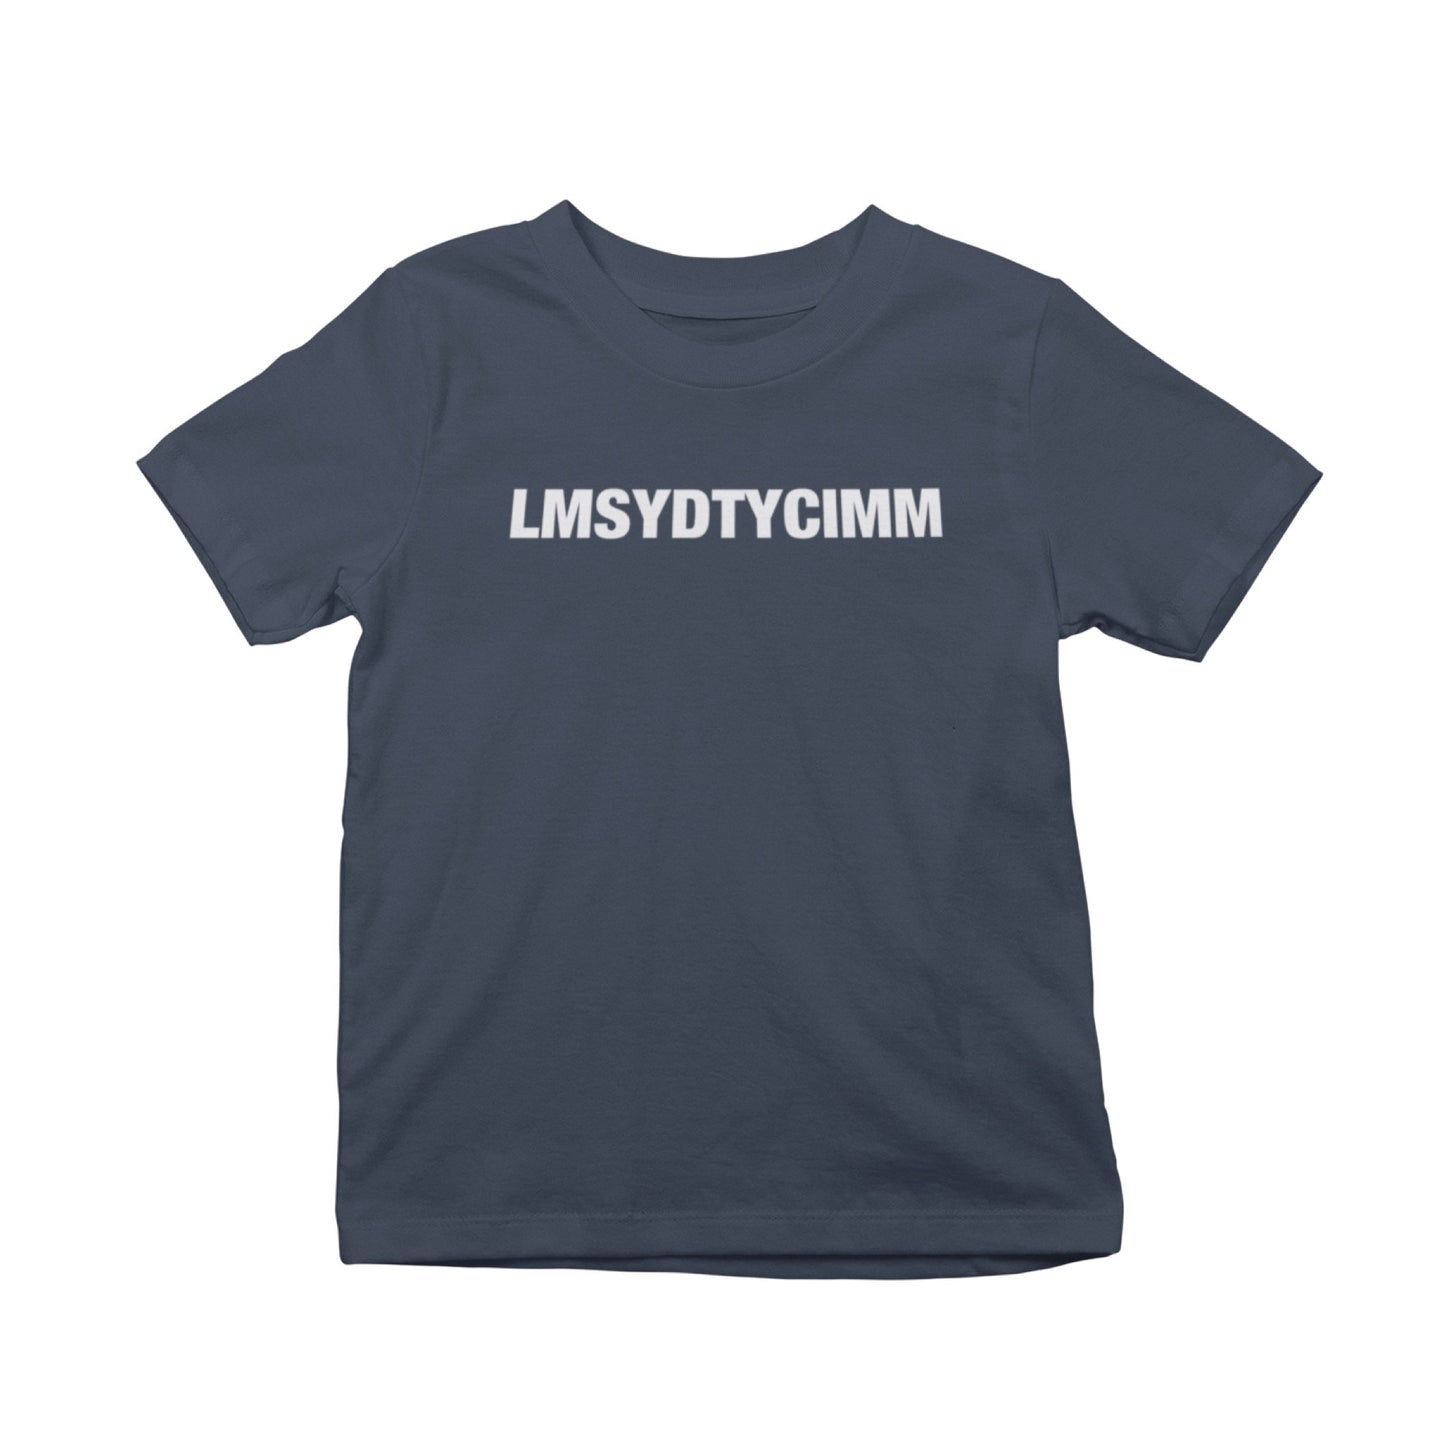 LMSYDTYCIMM T-Shirt